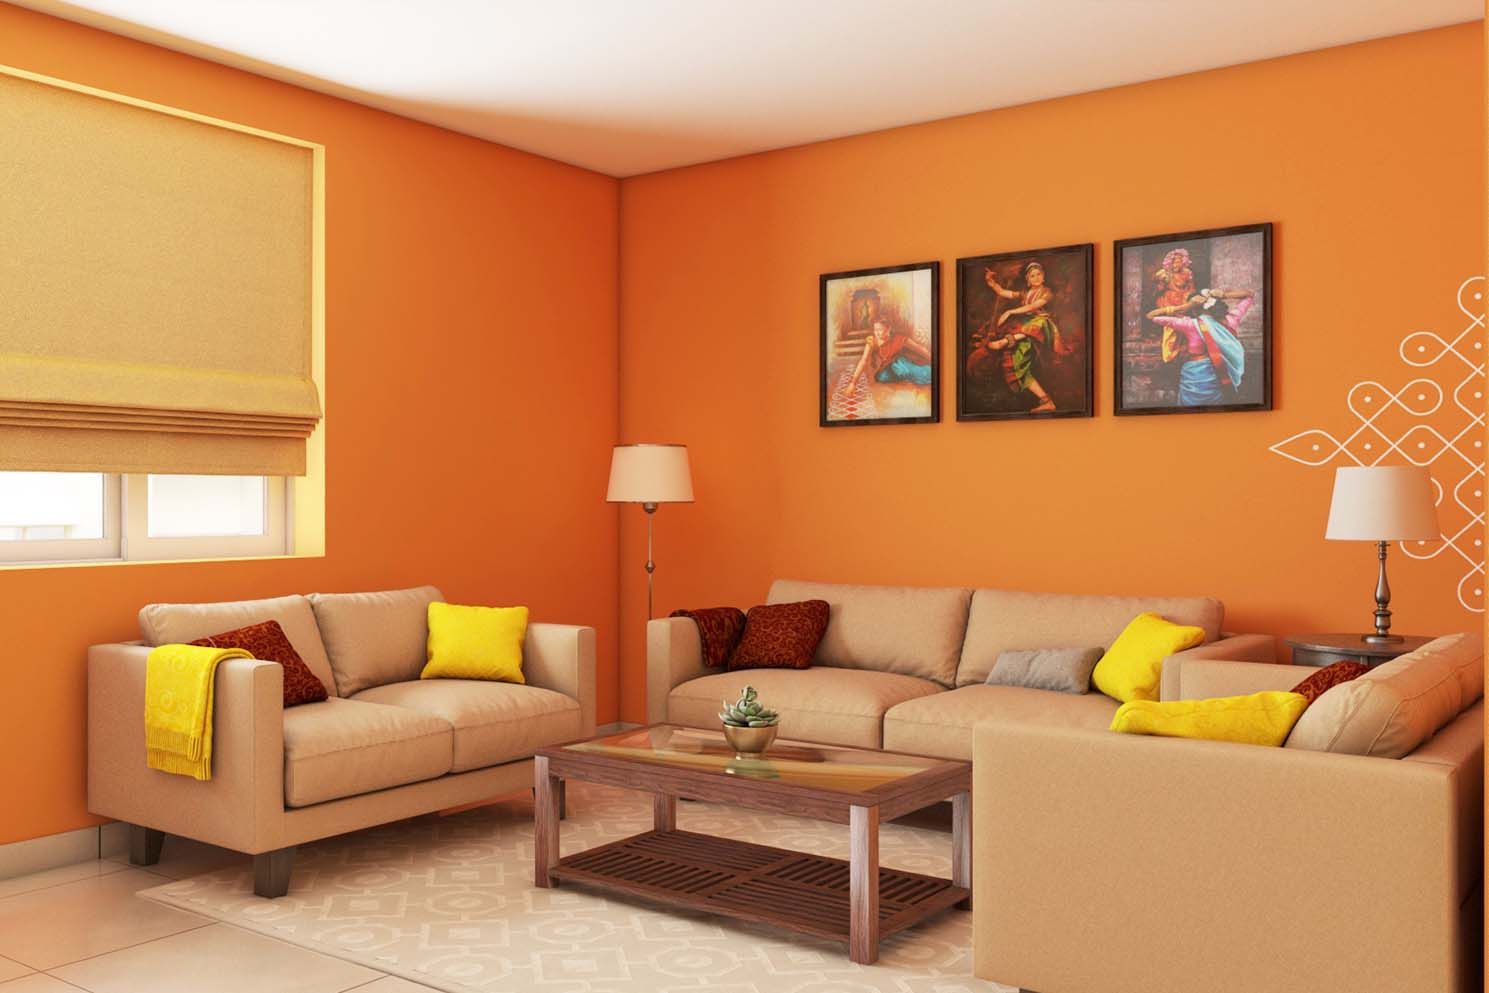 Modern Orange-Themed Living Room Design With Traditional Art